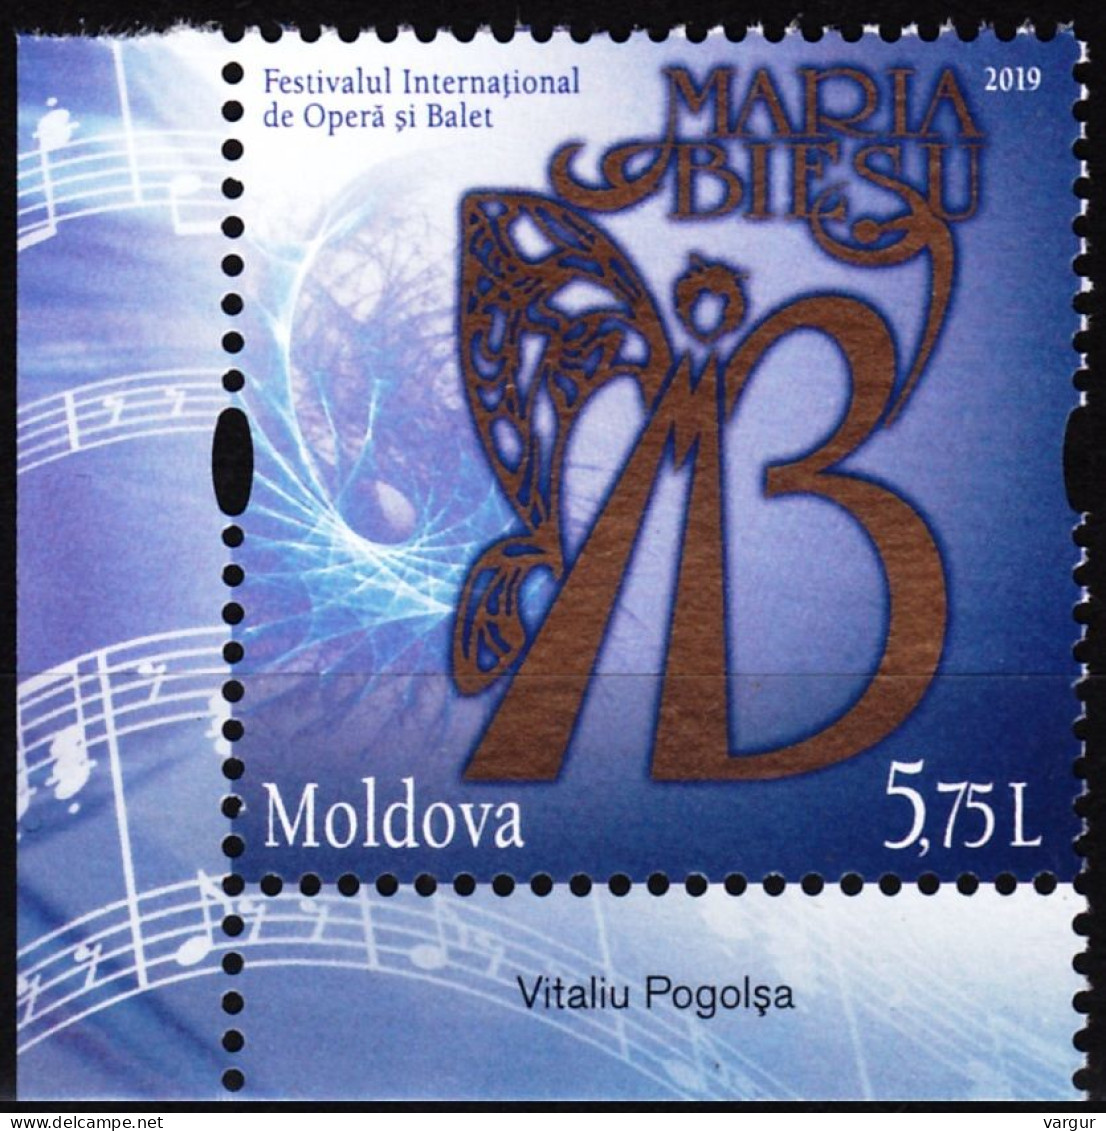 MOLDOVA 2019-16 MUSIC: Bieshu Festival Of Opera And Ballet. CORNER, MNH - Music